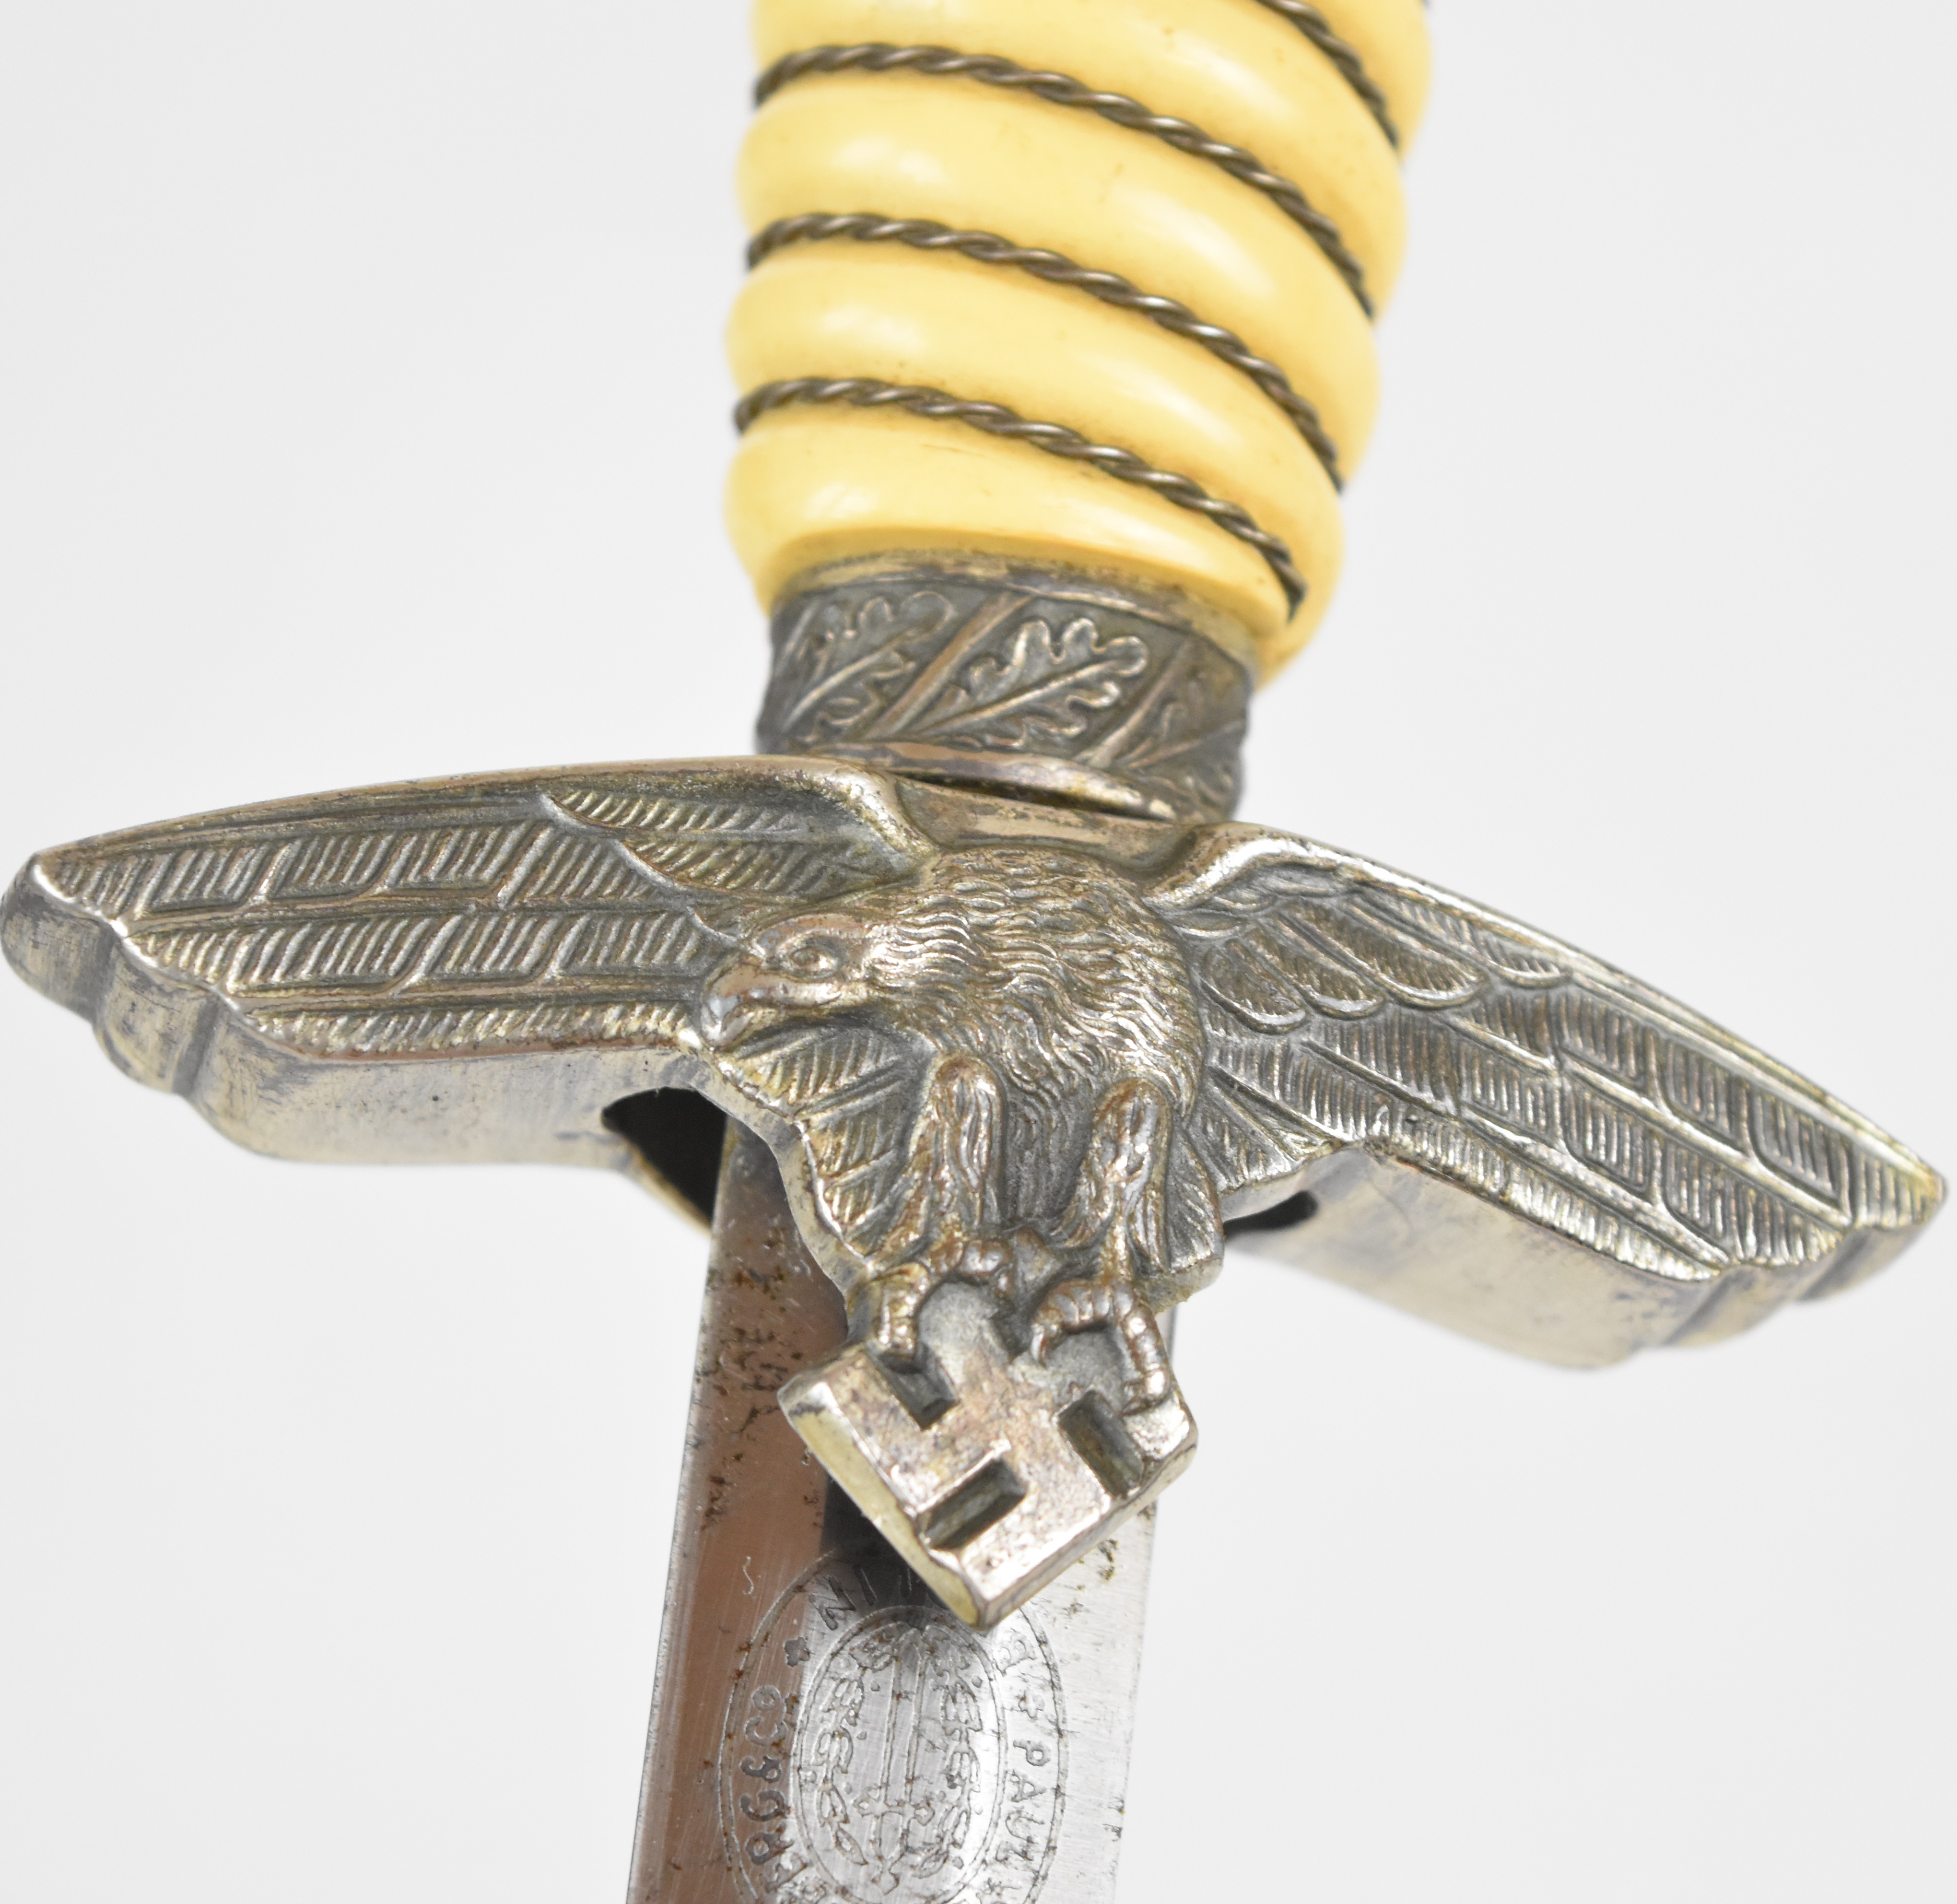 German WW2 Nazi Third Reich Luftwaffe officer's dress dagger with swastika and oak leaf decoration - Image 5 of 11